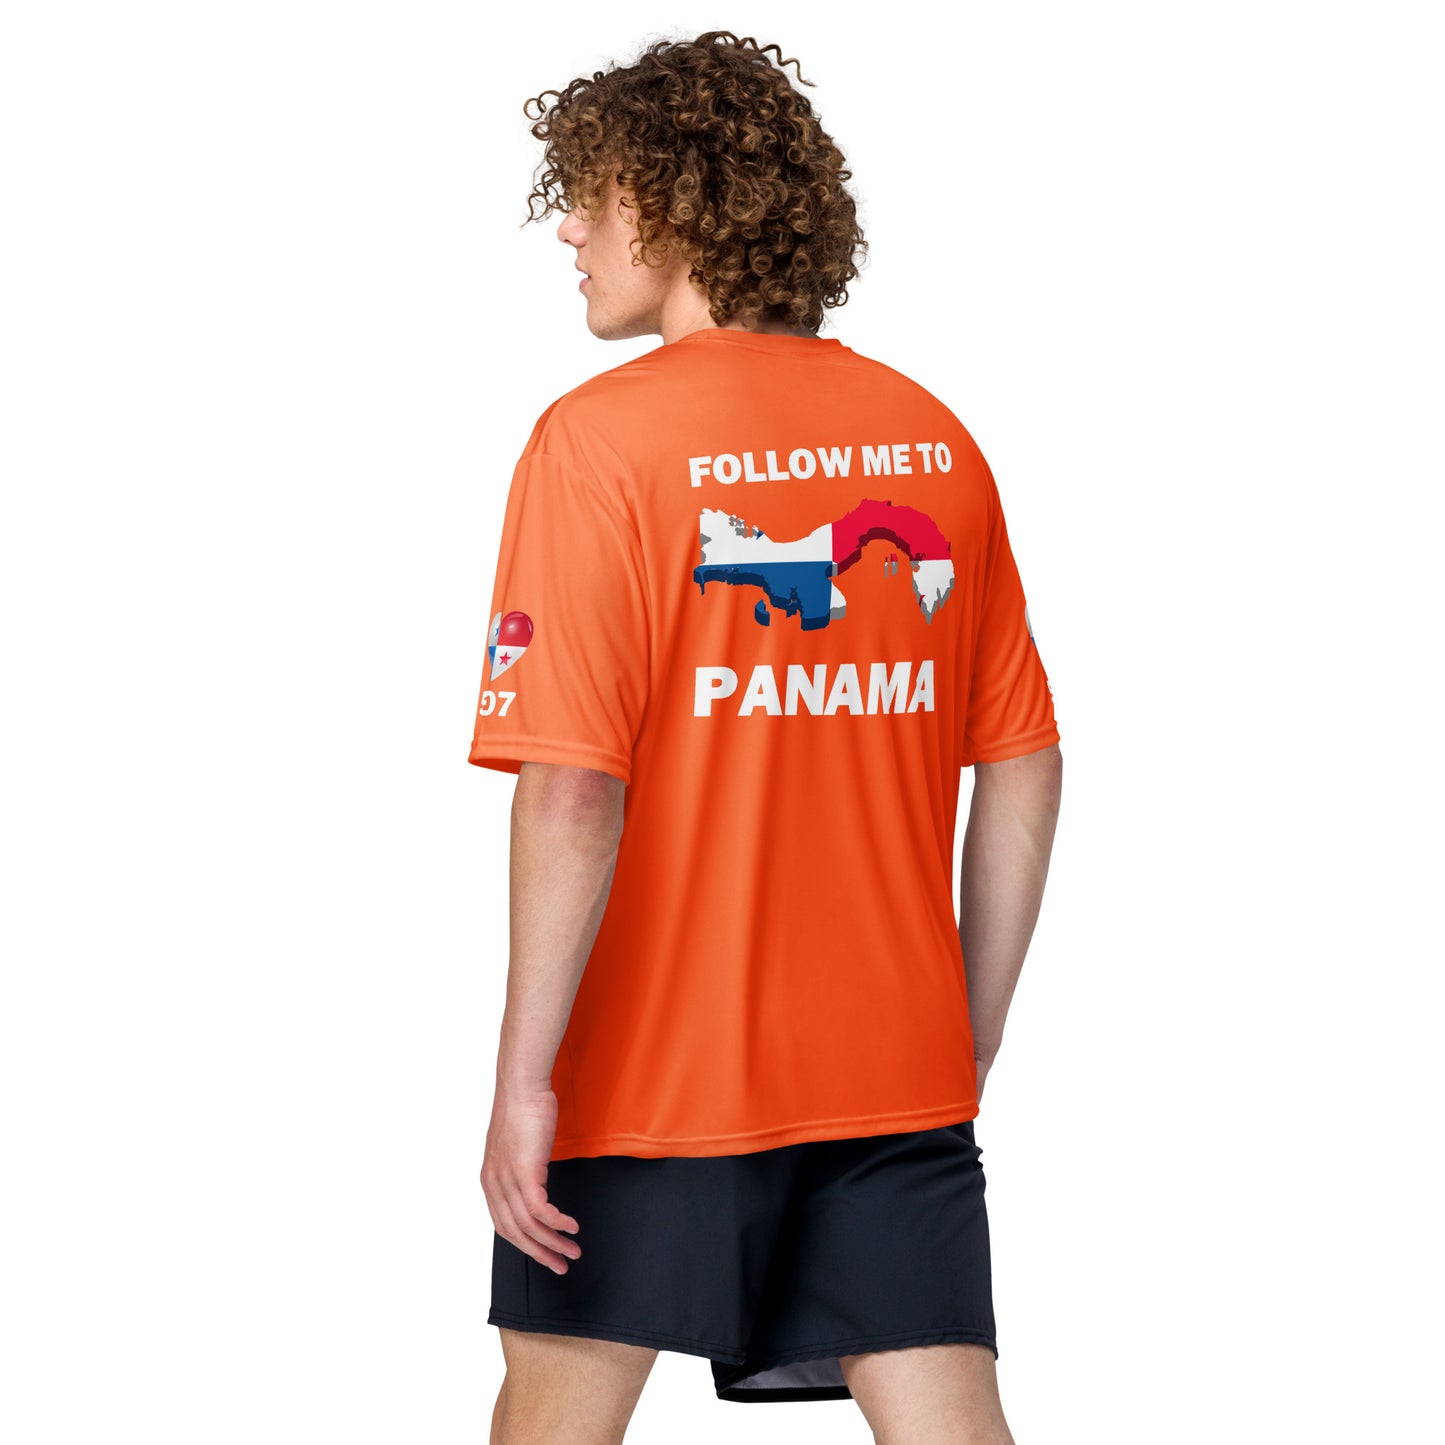 Panama Peloton Unisex Performance Crew Neck T-shirt